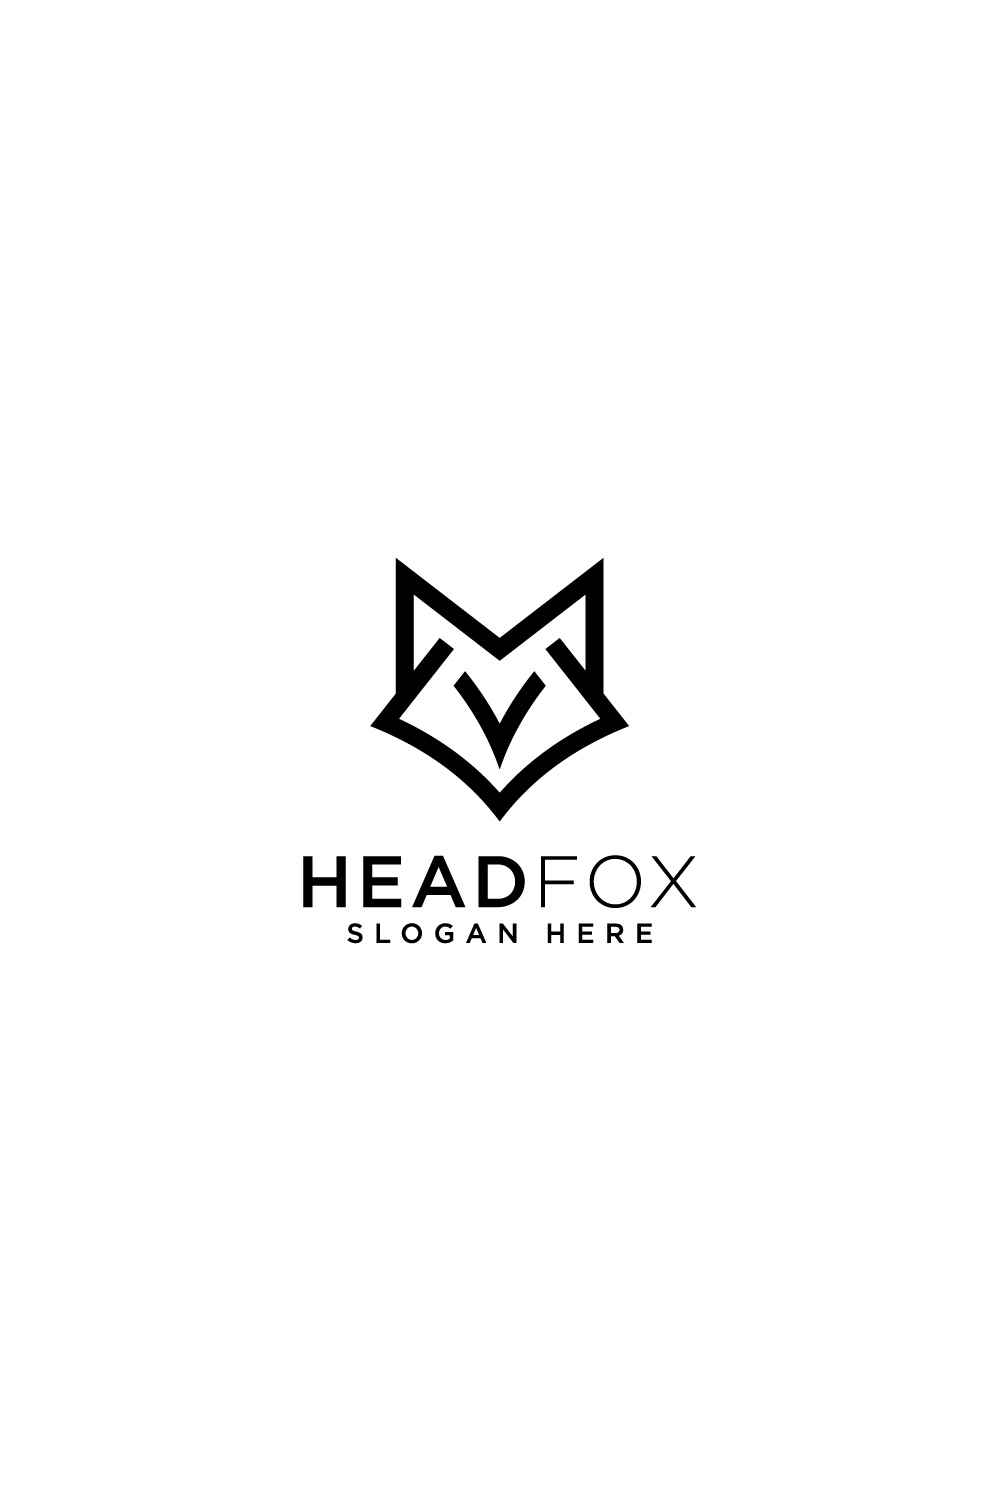 head fox animal design template pinterest preview image.